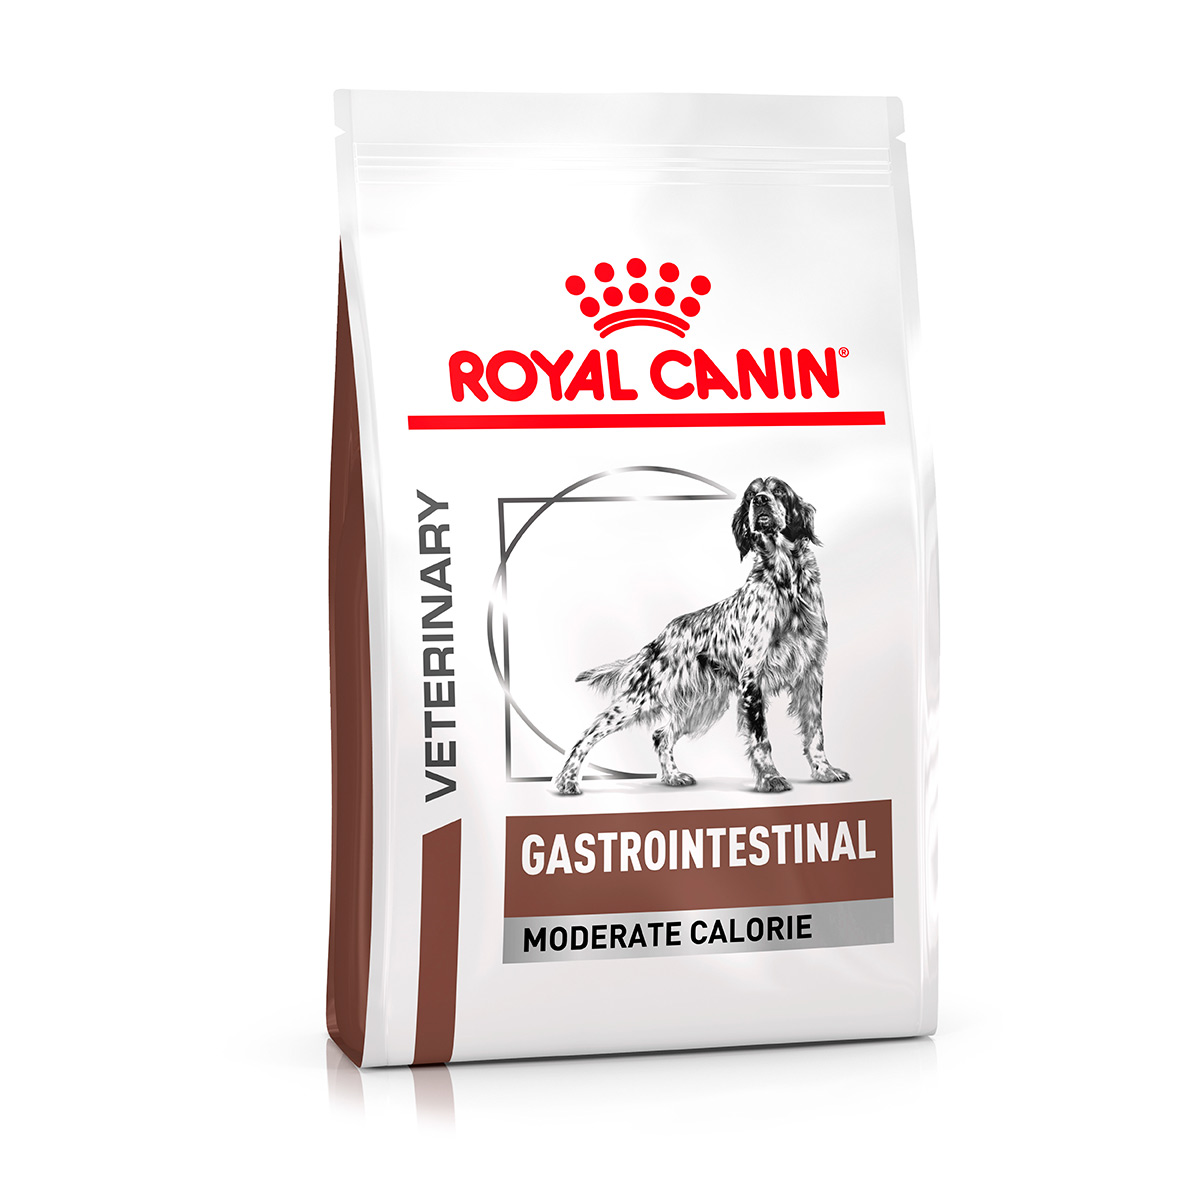 ROYAL CANIN® Veterinary GASTROINTESTINAL MODERATE CALORIE Trockenfutter für Hunde 15kg von Royal Canin